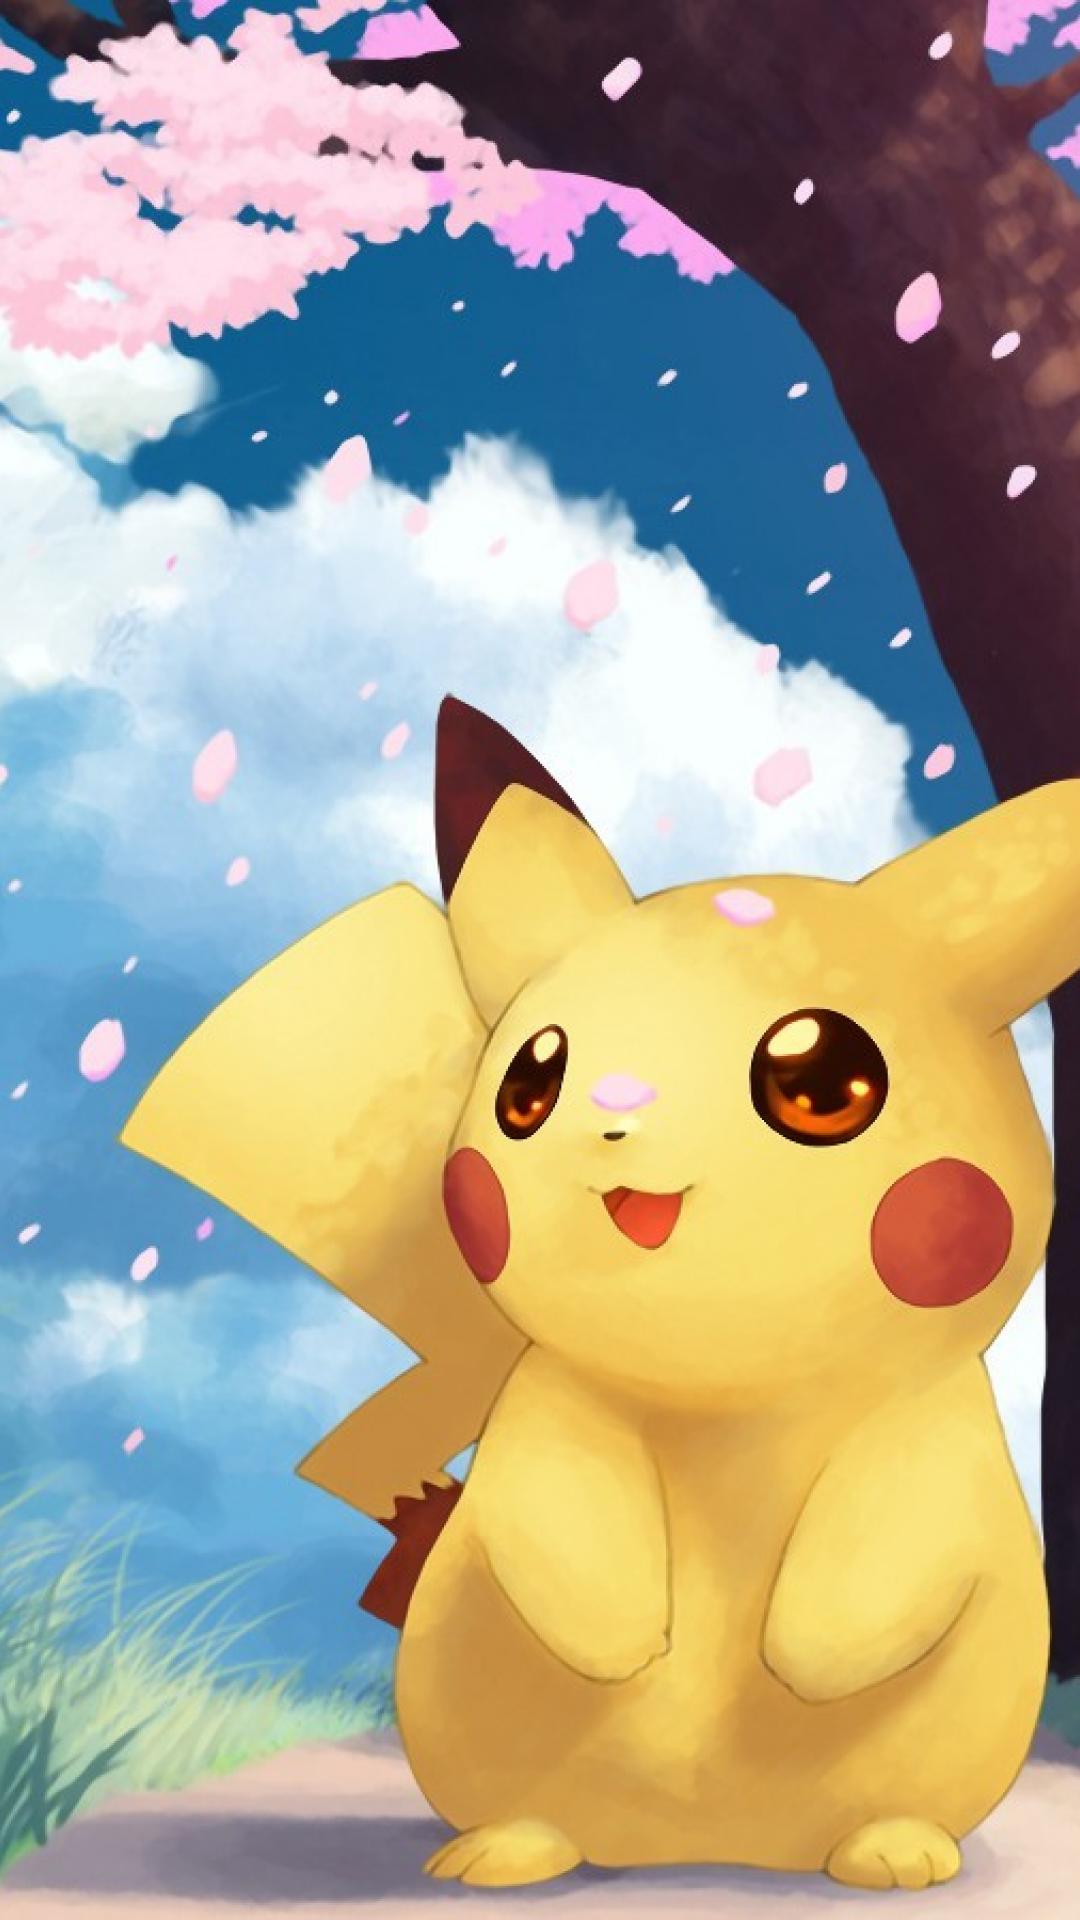 Download Pokemon Iphone Backgrounds Wallpaper Hd - Cute Wallpaper Iphone 6  Pokemon - 1080x1920 Wallpaper 